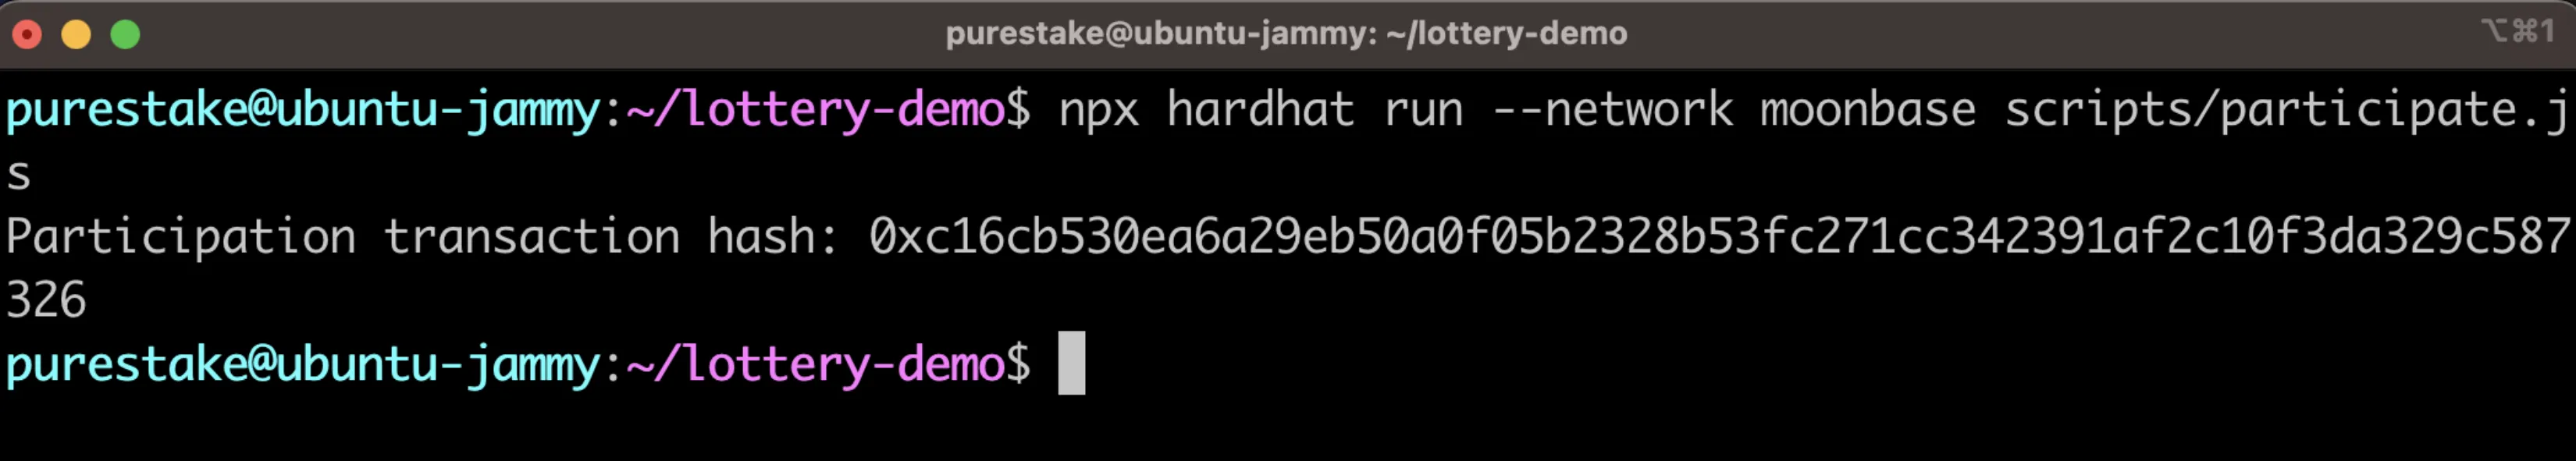 Run the partipation script using Hardhat's run command.